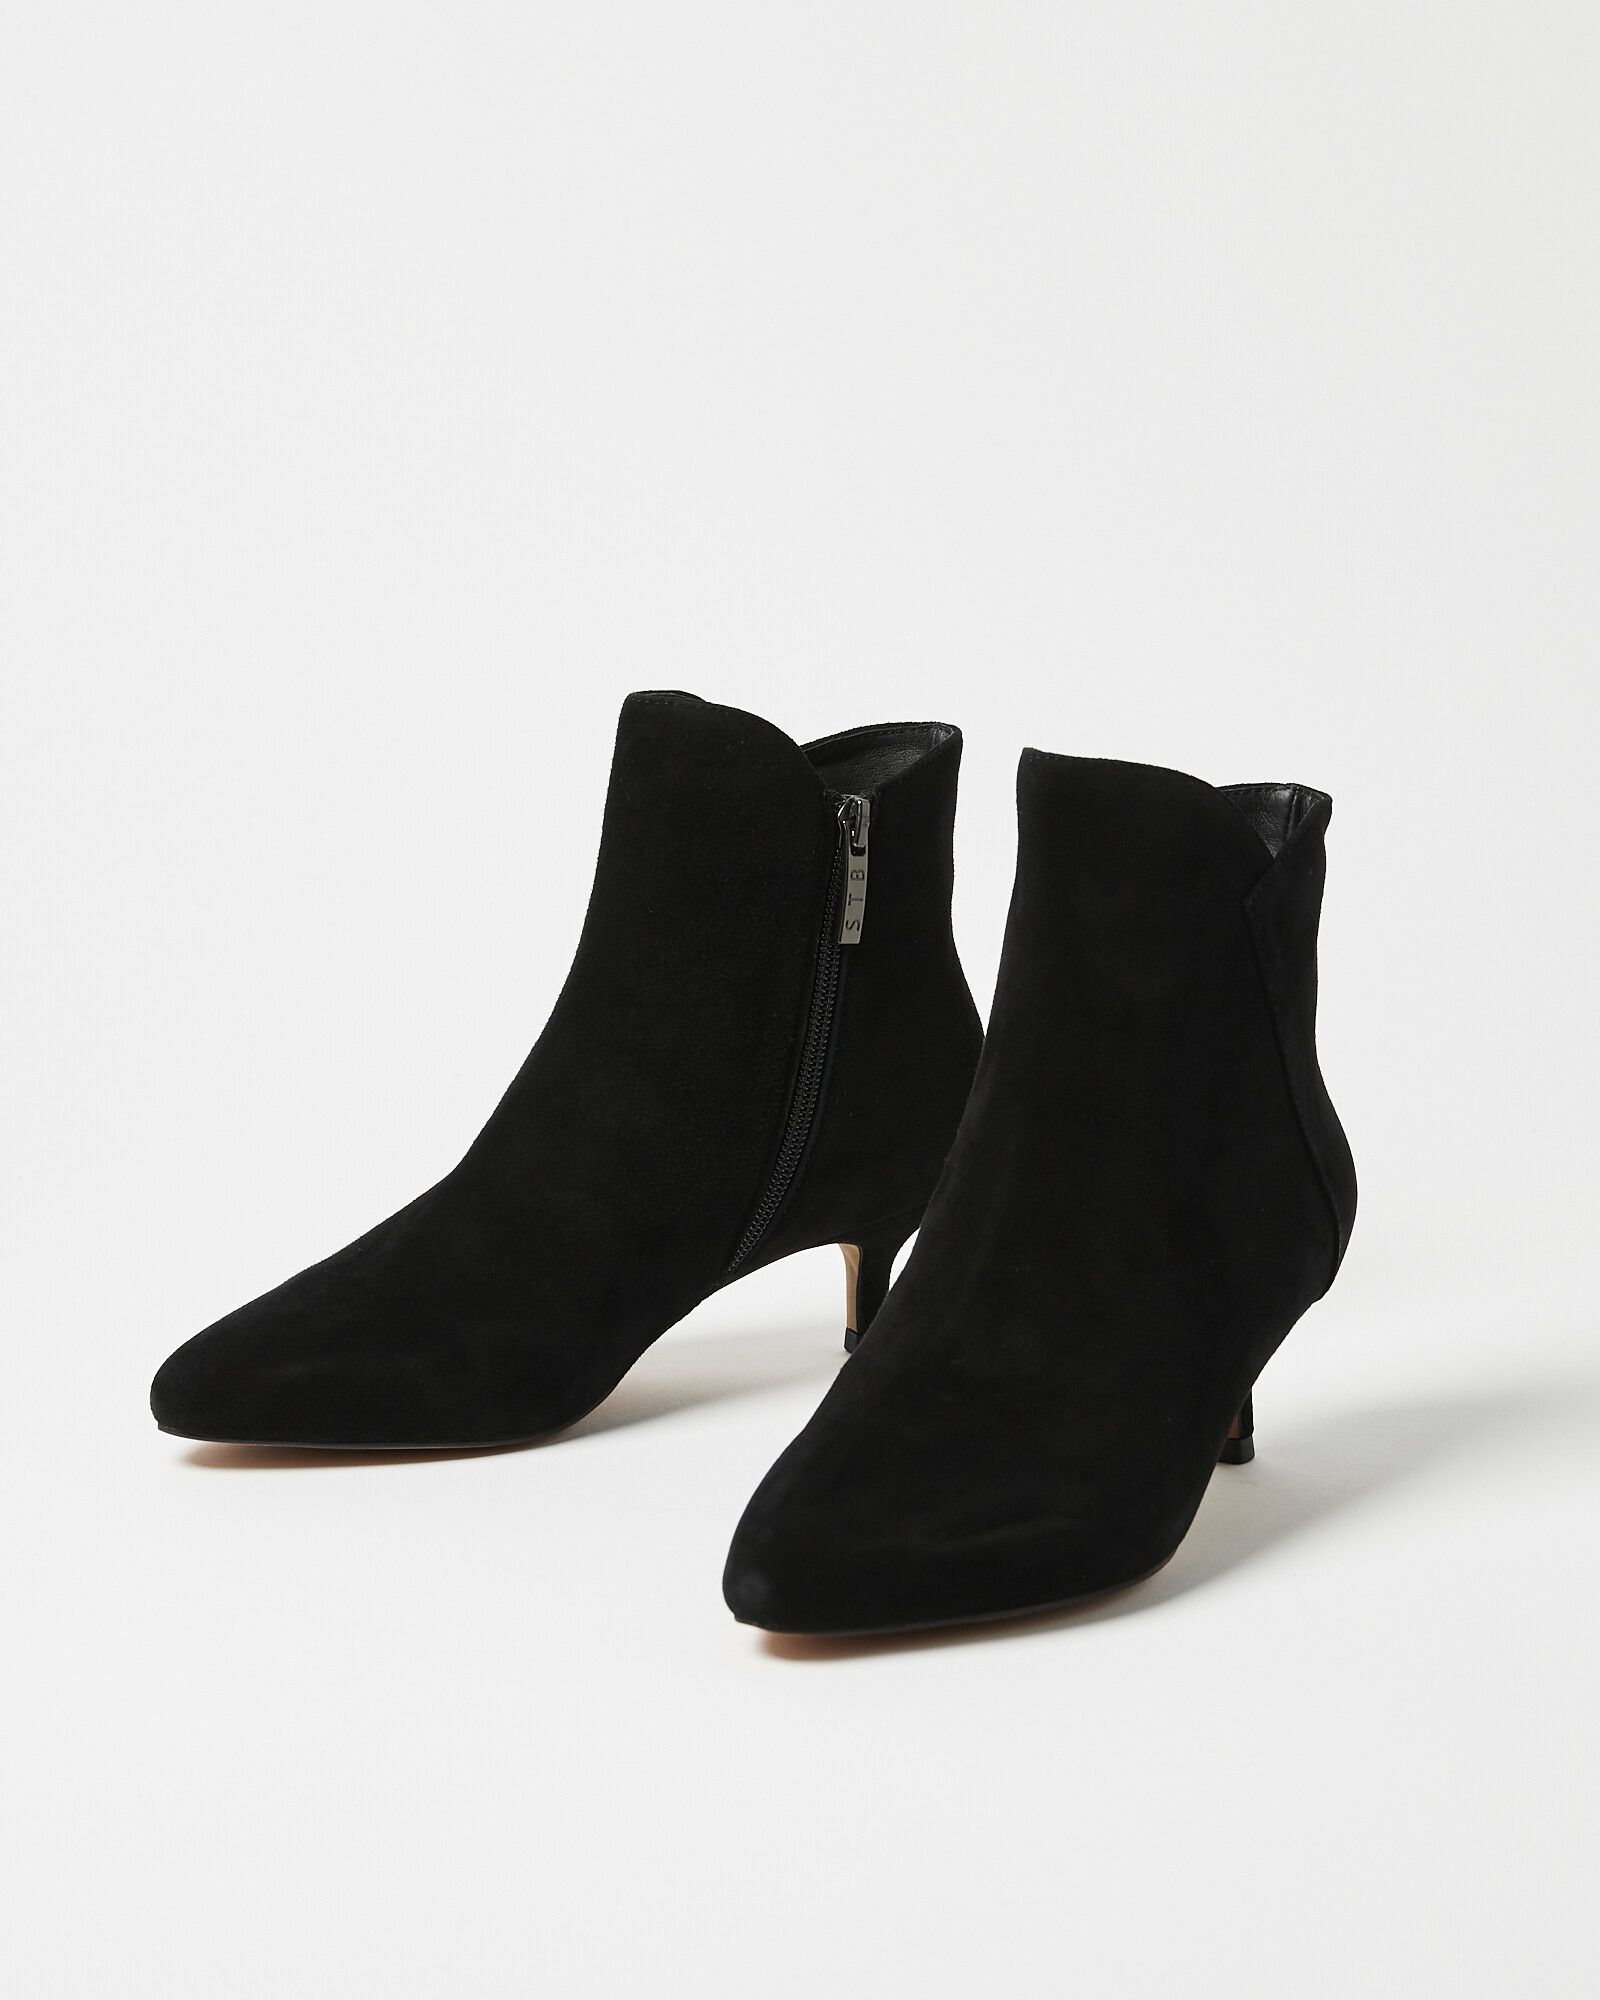 Shoe The Bear Saga Zip Black Suede Leather Boots | Oliver Bonas